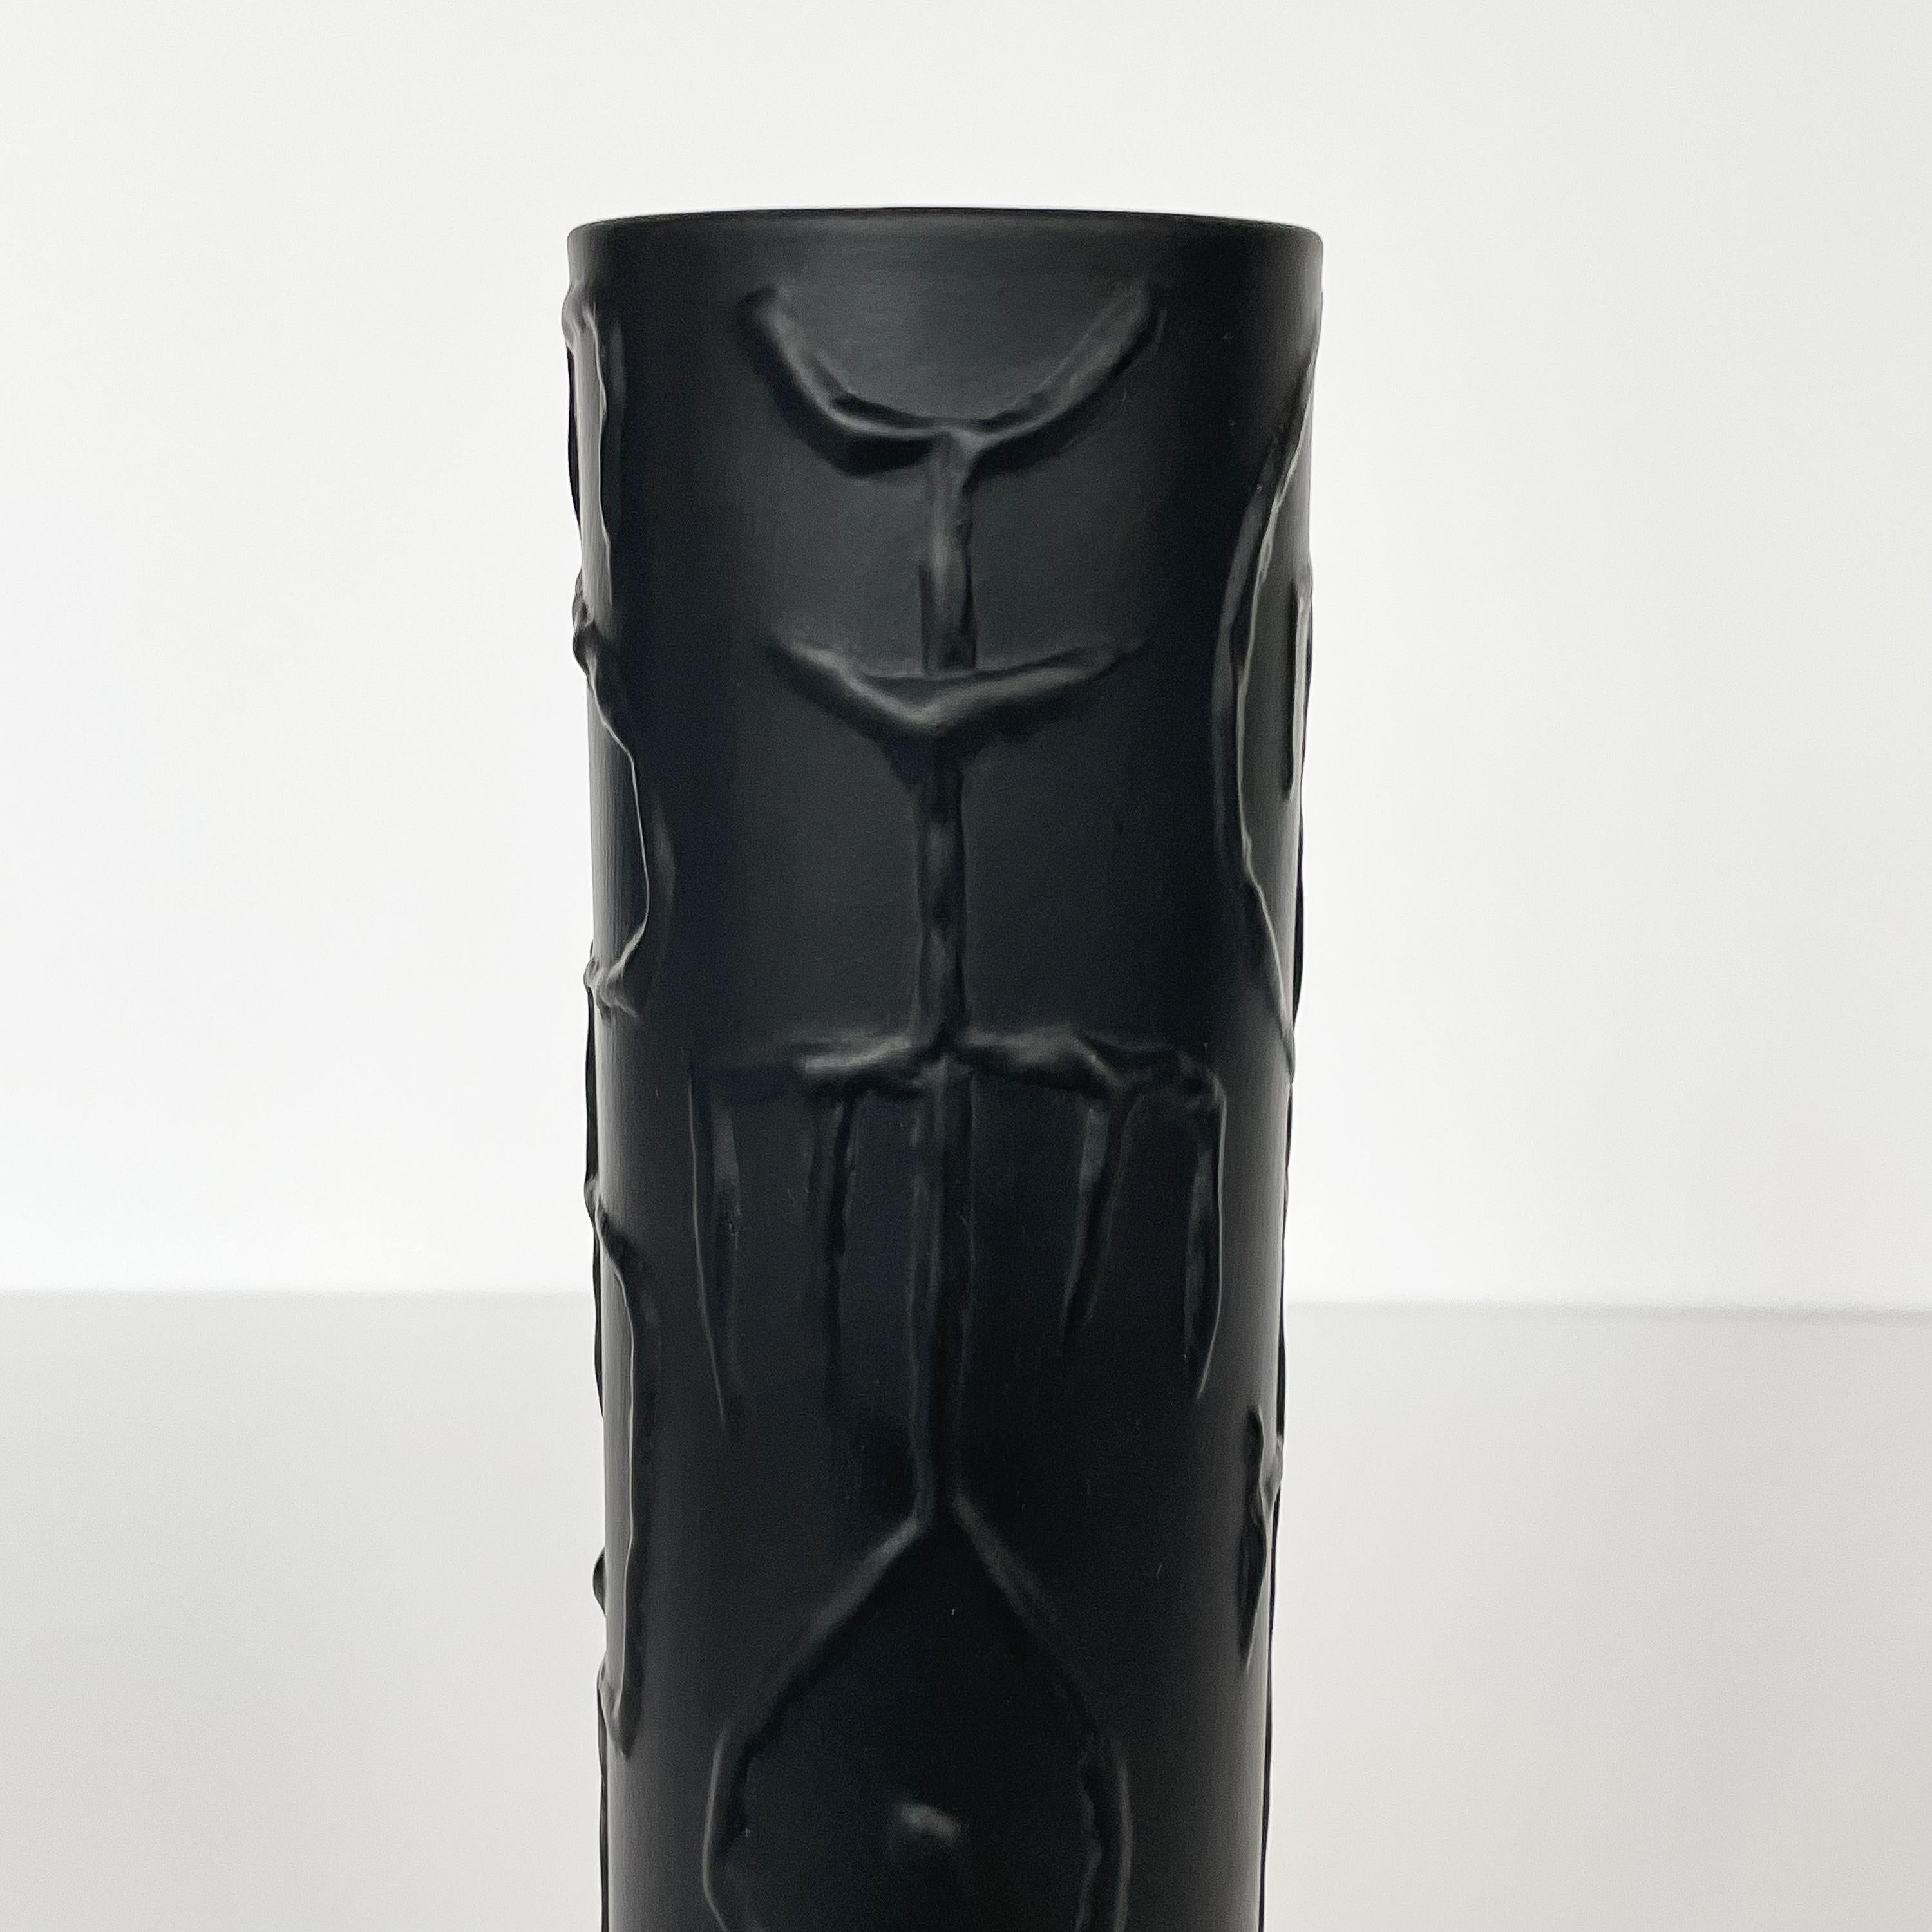 Cuno Fischer Black Matte Vase for Rosenthal 1